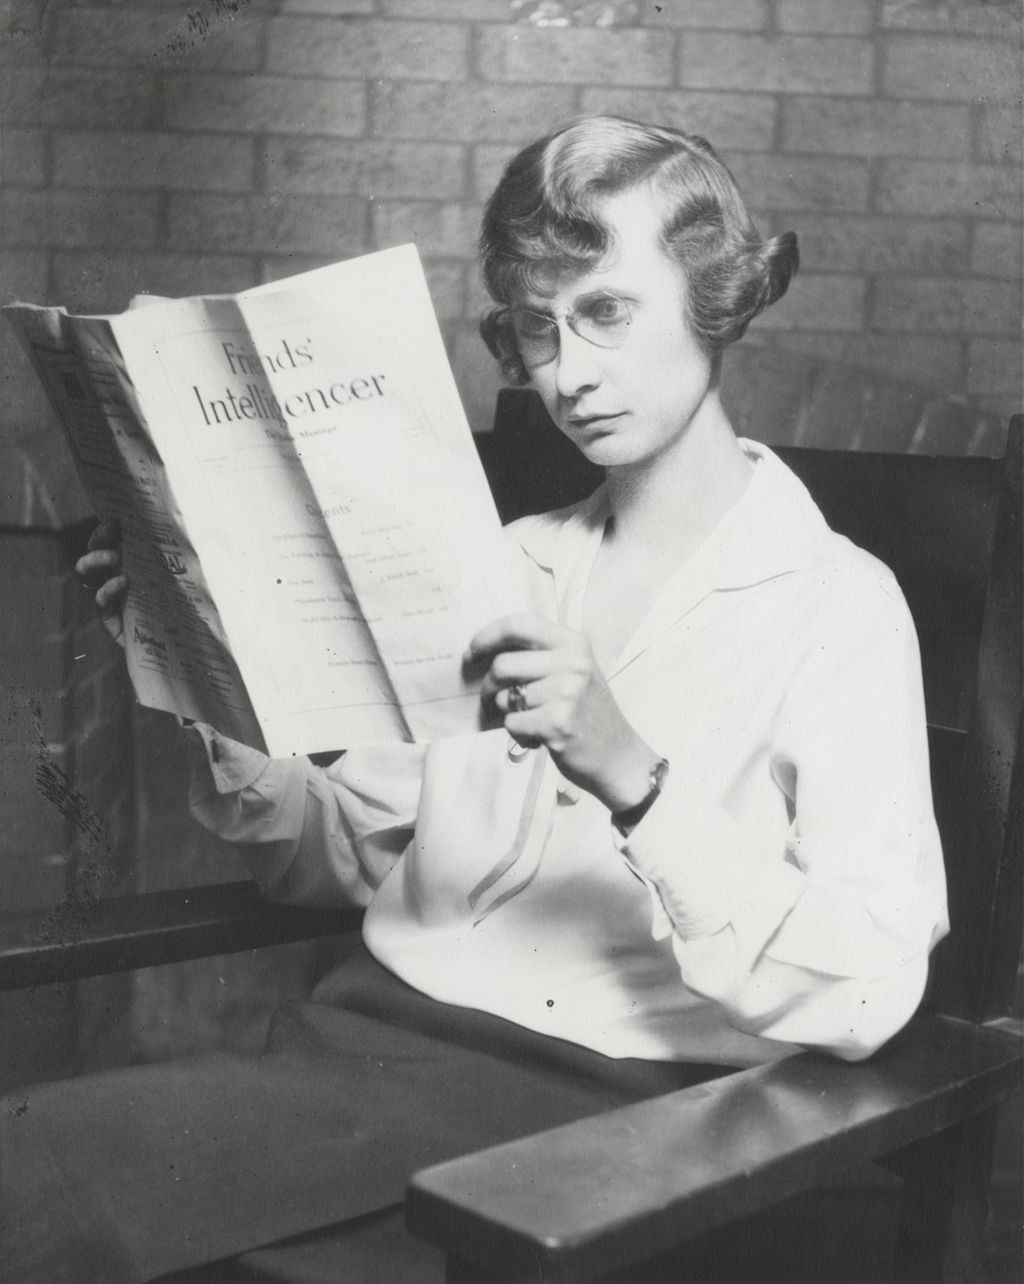 Hull-House secretary Mrs. Stetson reading Friends' Intelligencer